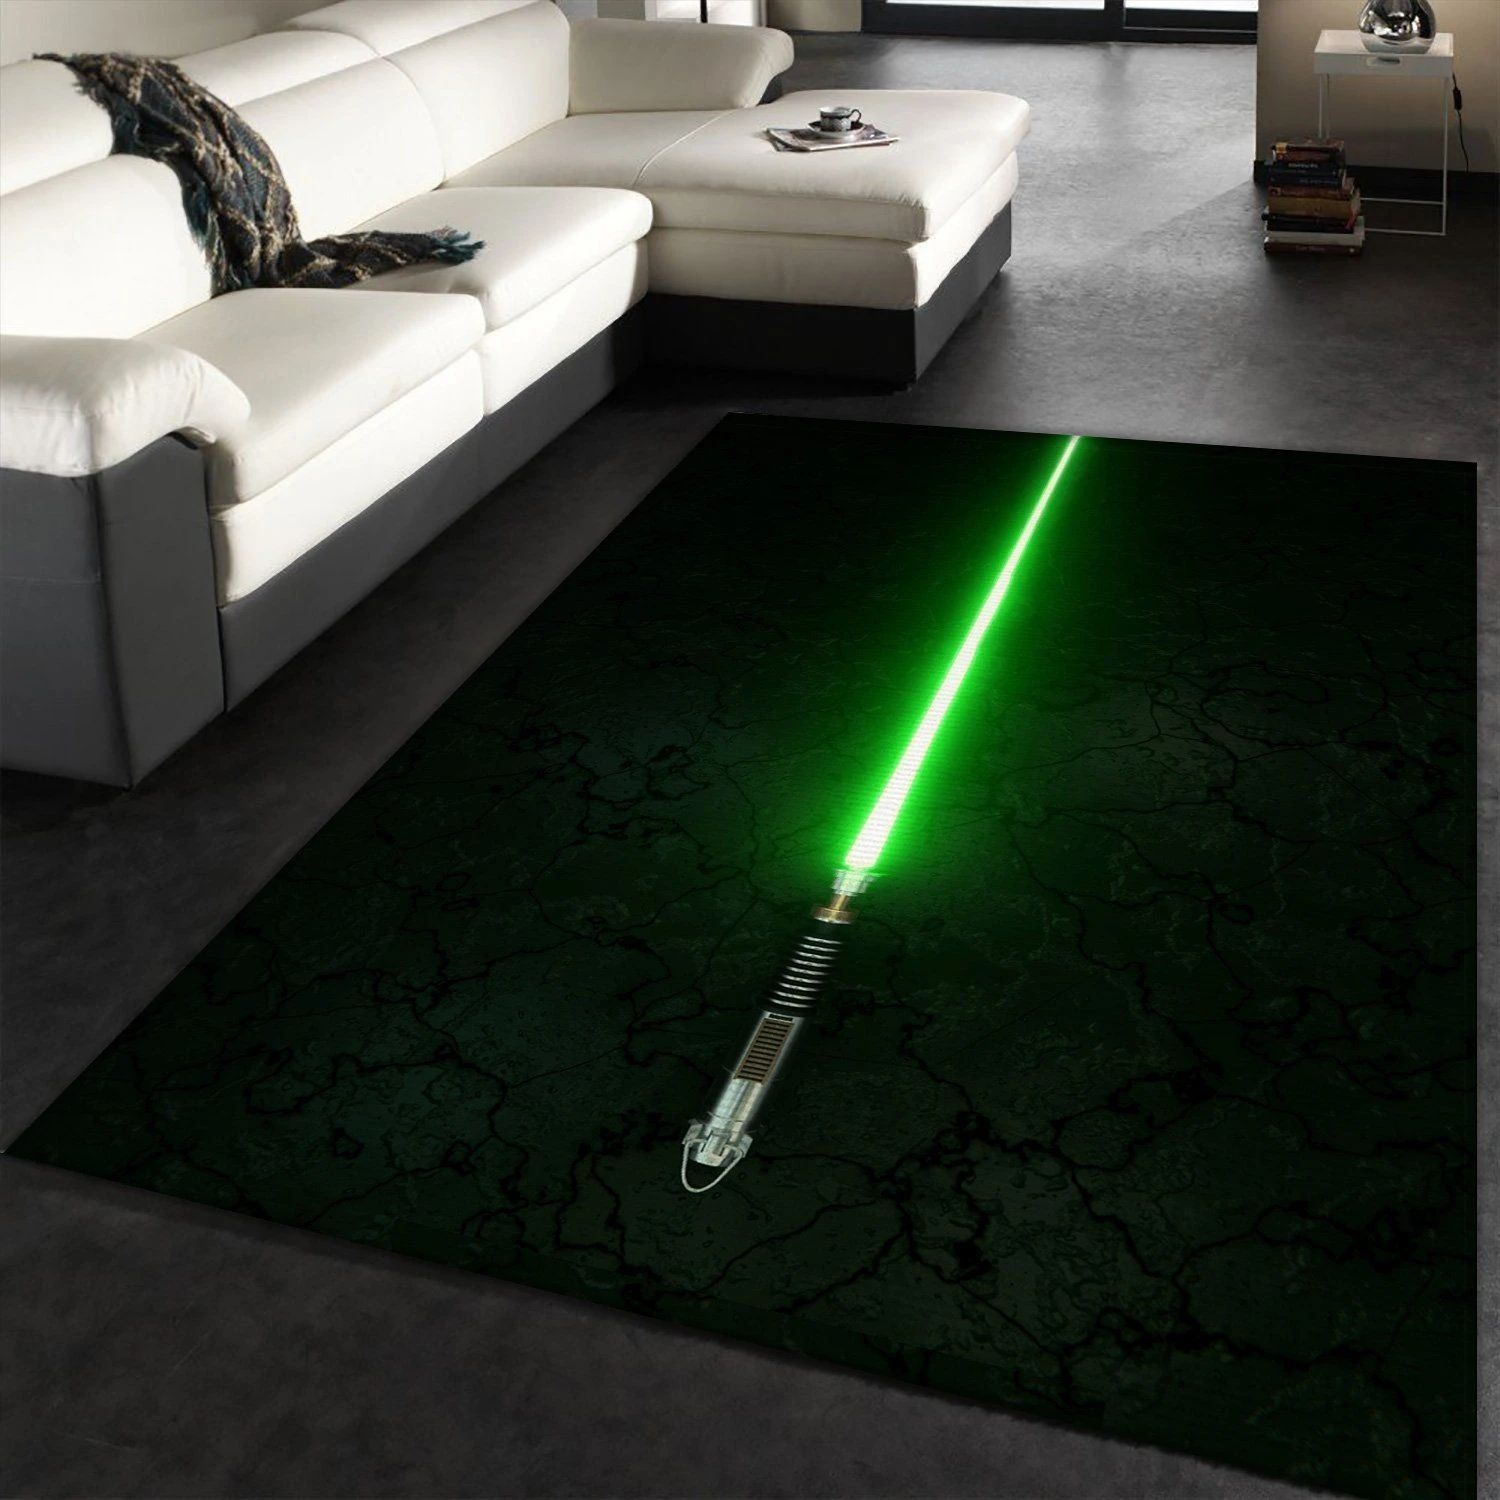 Light saber star wars area rug geeky carpet floor decor - indoor outdoor rugs - small ( 3 x 5 ft )